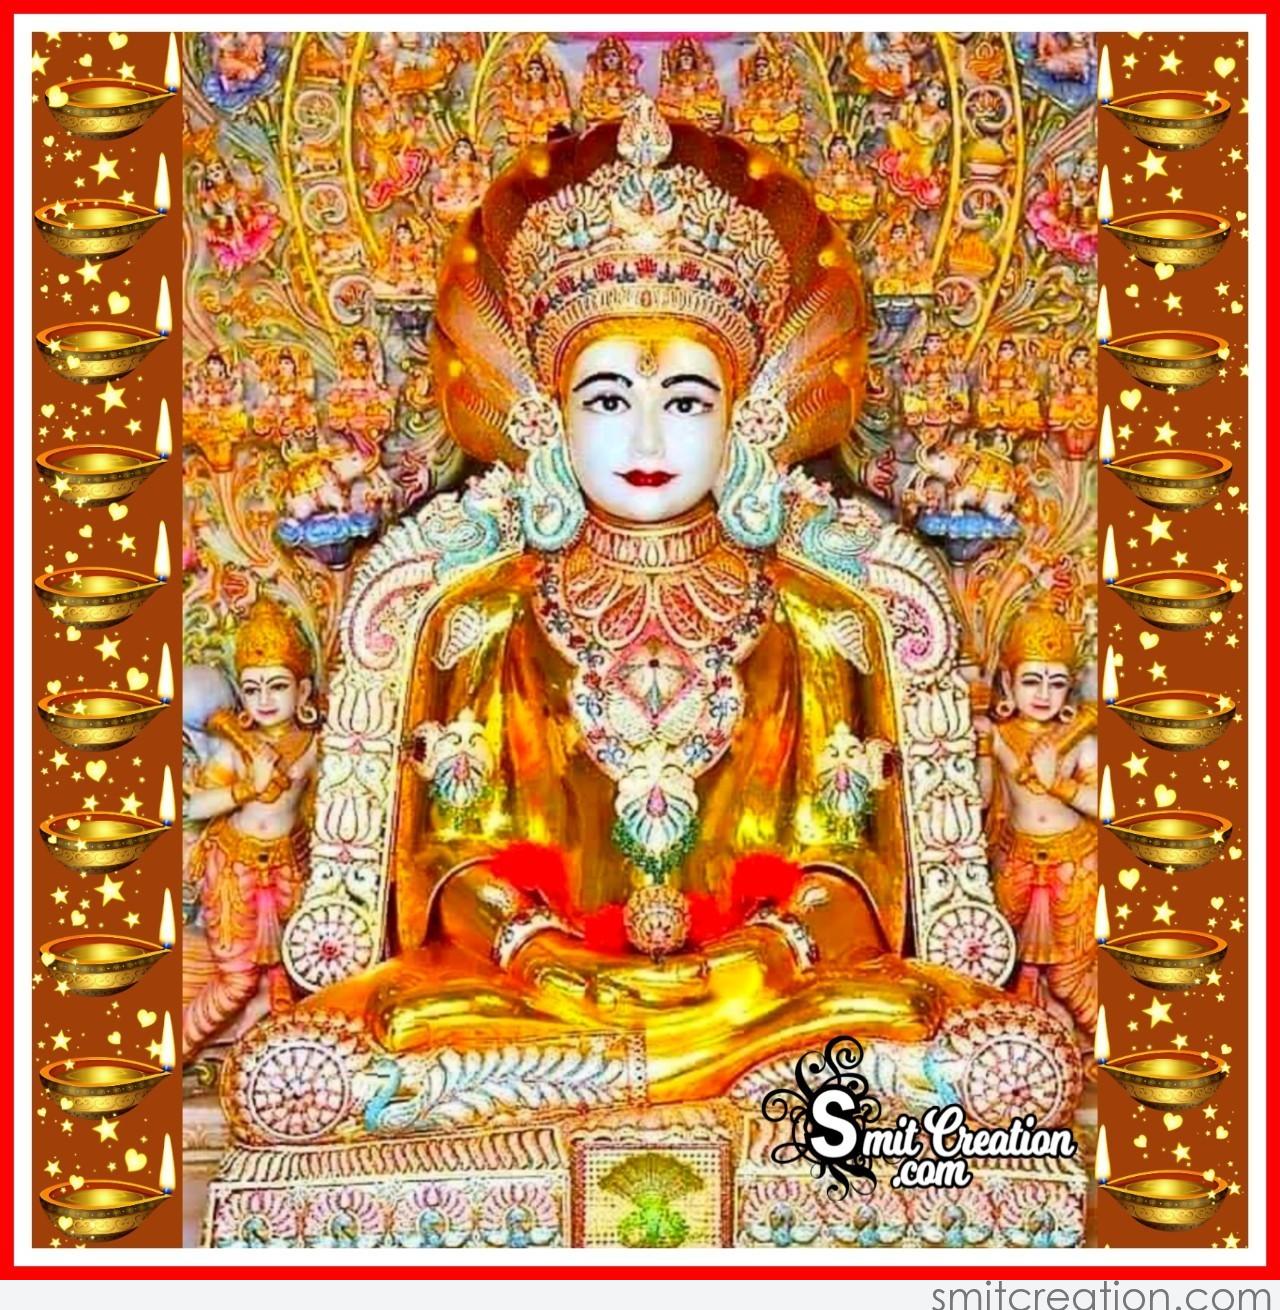 Top 999+ mahavir swami images – Amazing Collection mahavir swami images ...